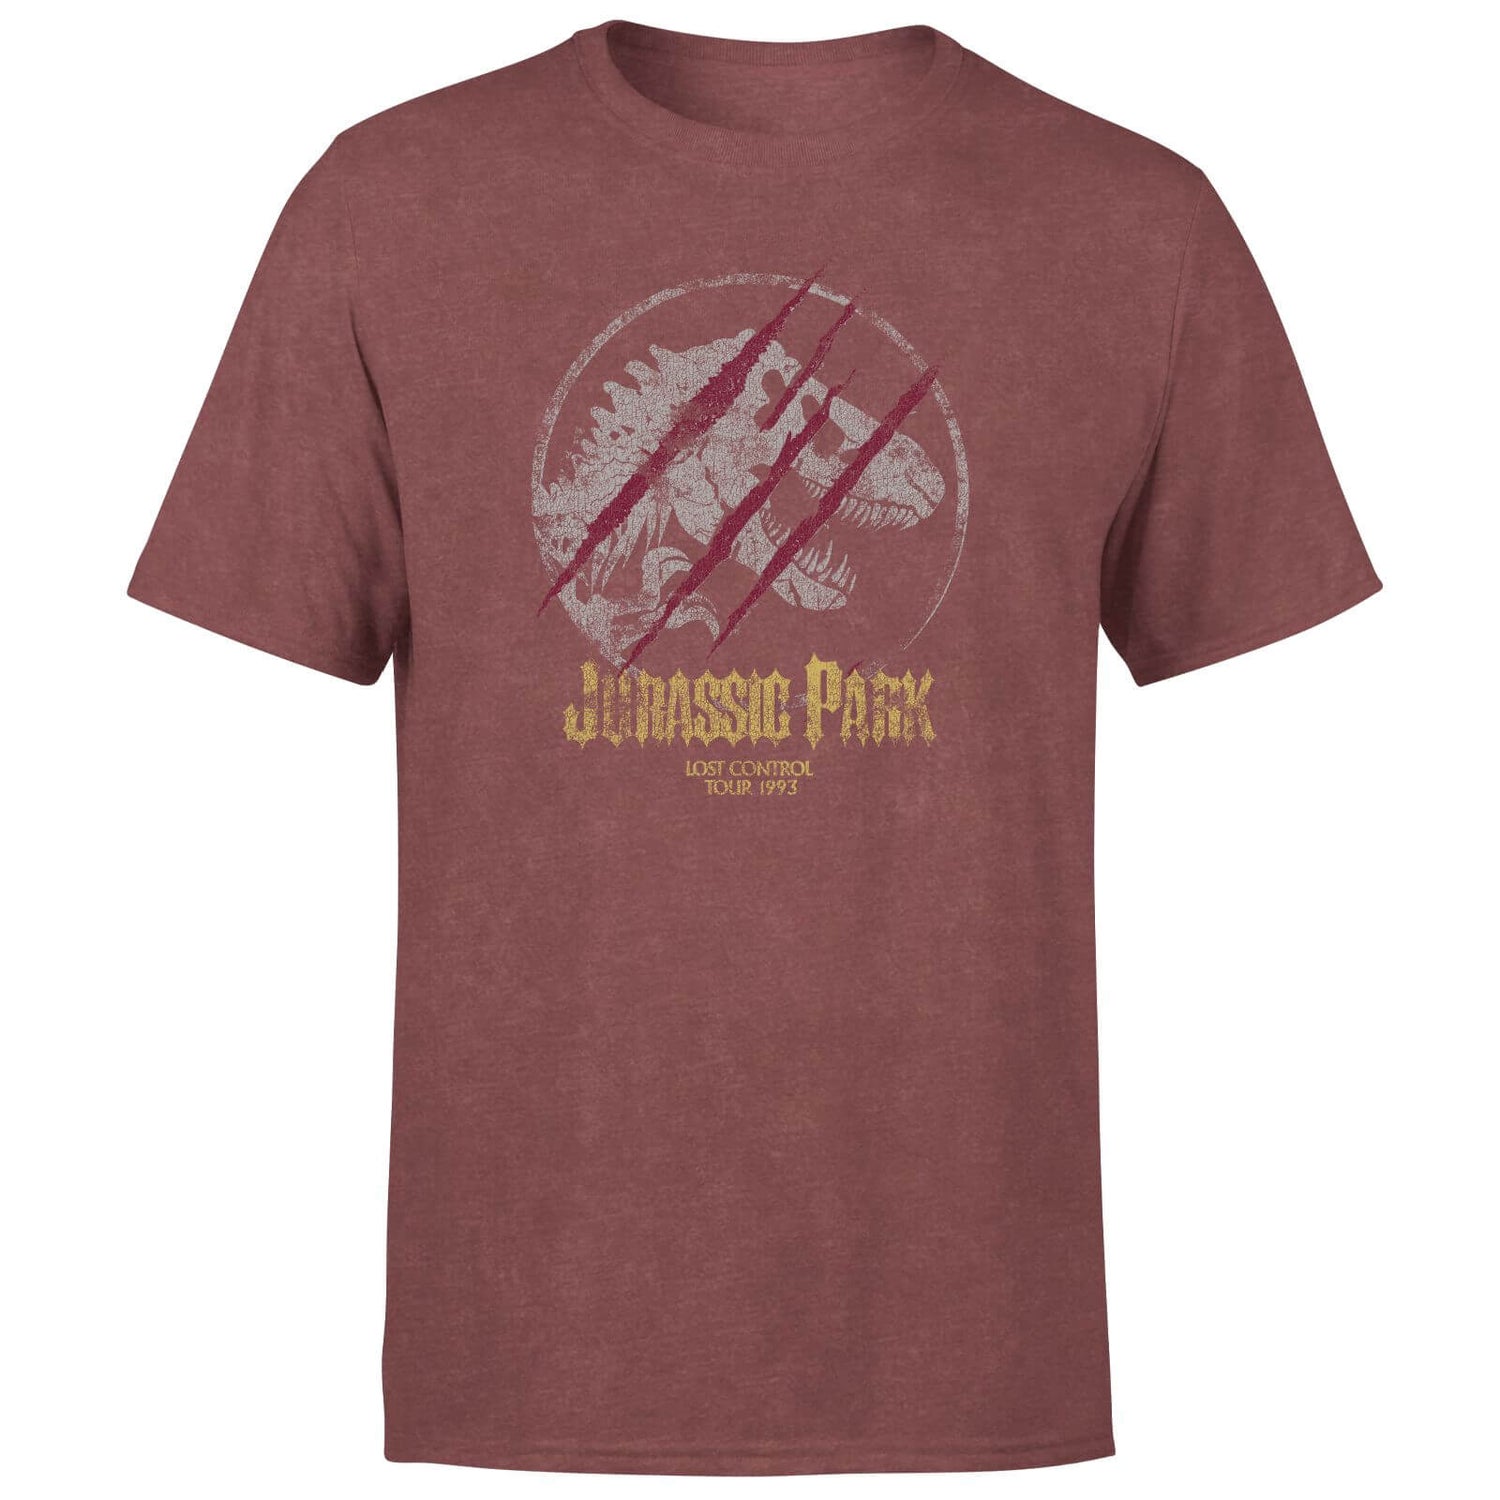 Jurassic Park Lost Control Men's T-Shirt - Burgundy Acid Wash